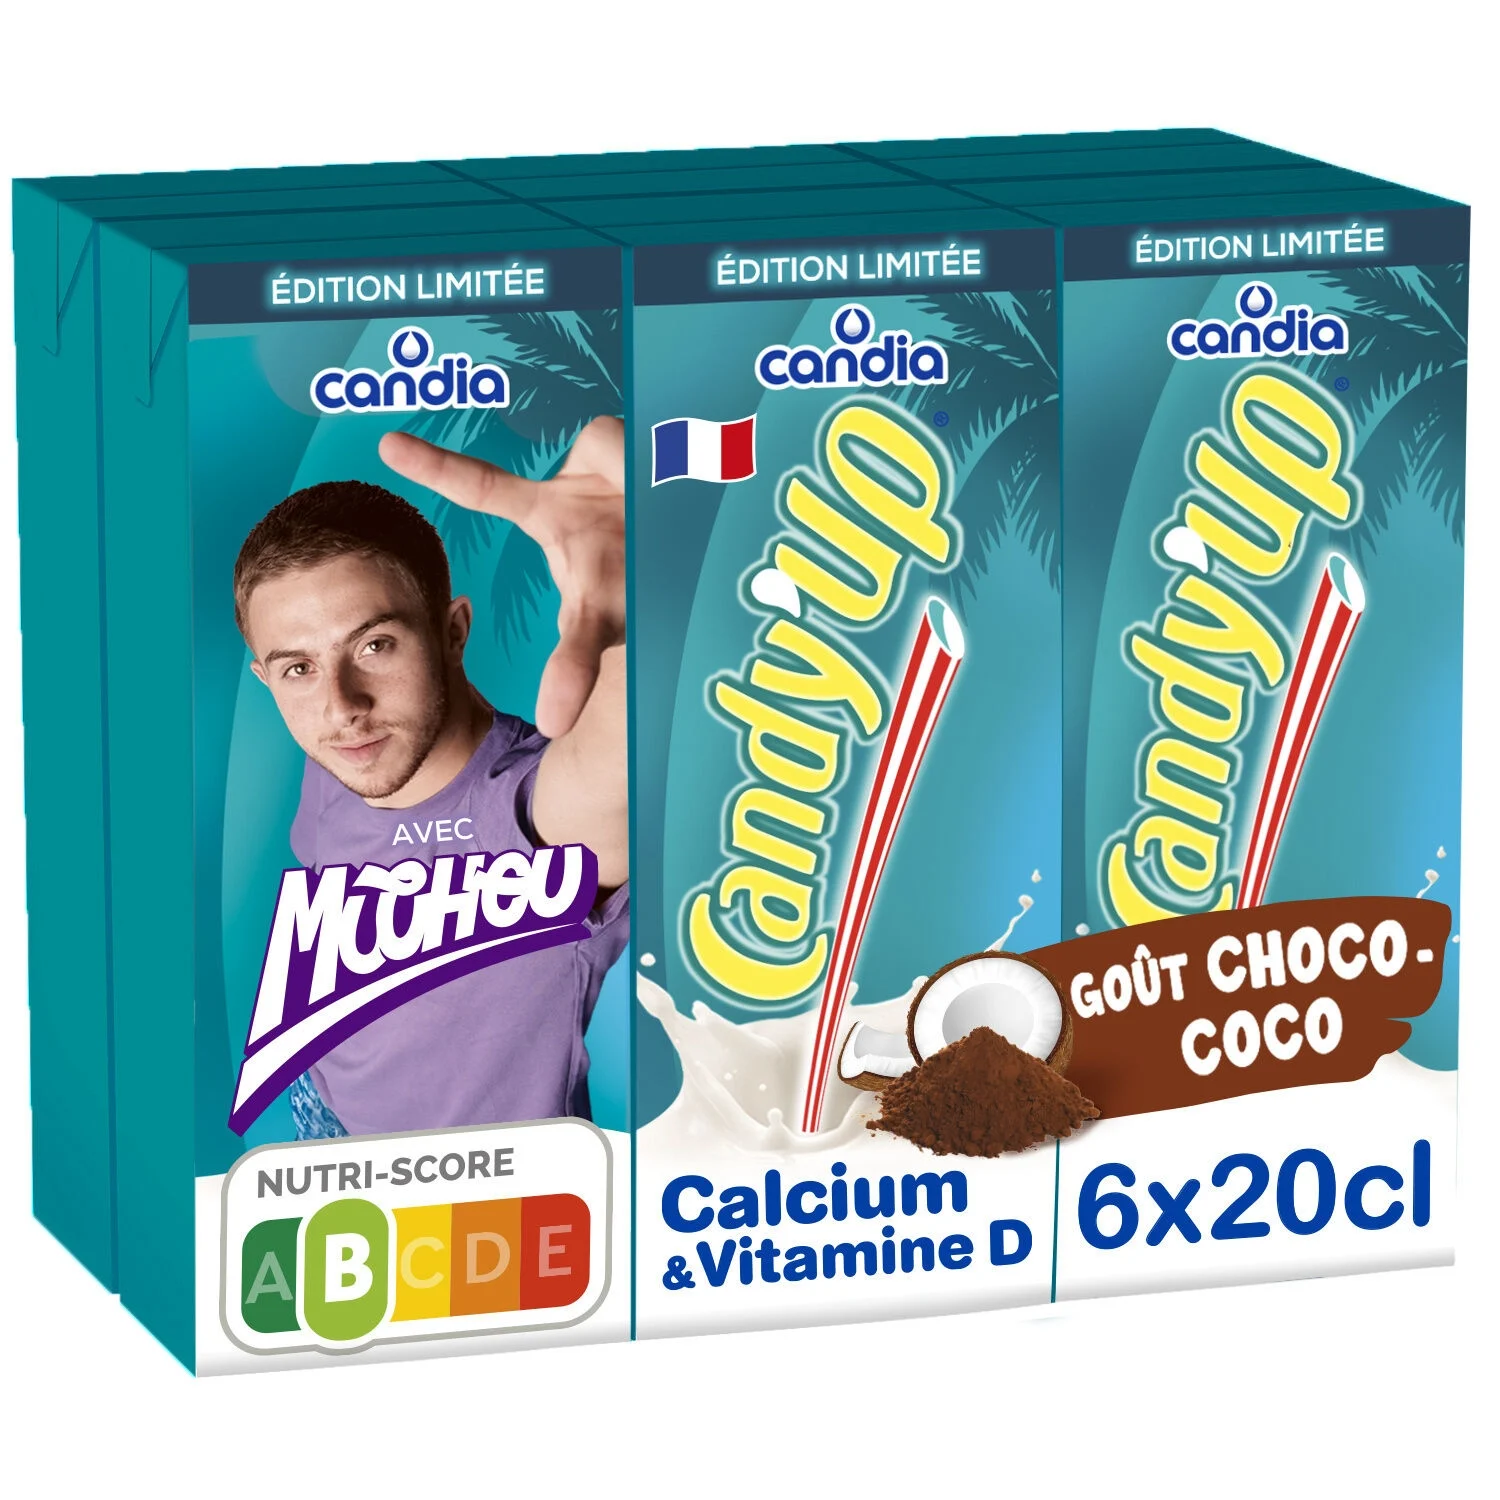 6x20 Bk Candy Up Choco Coco